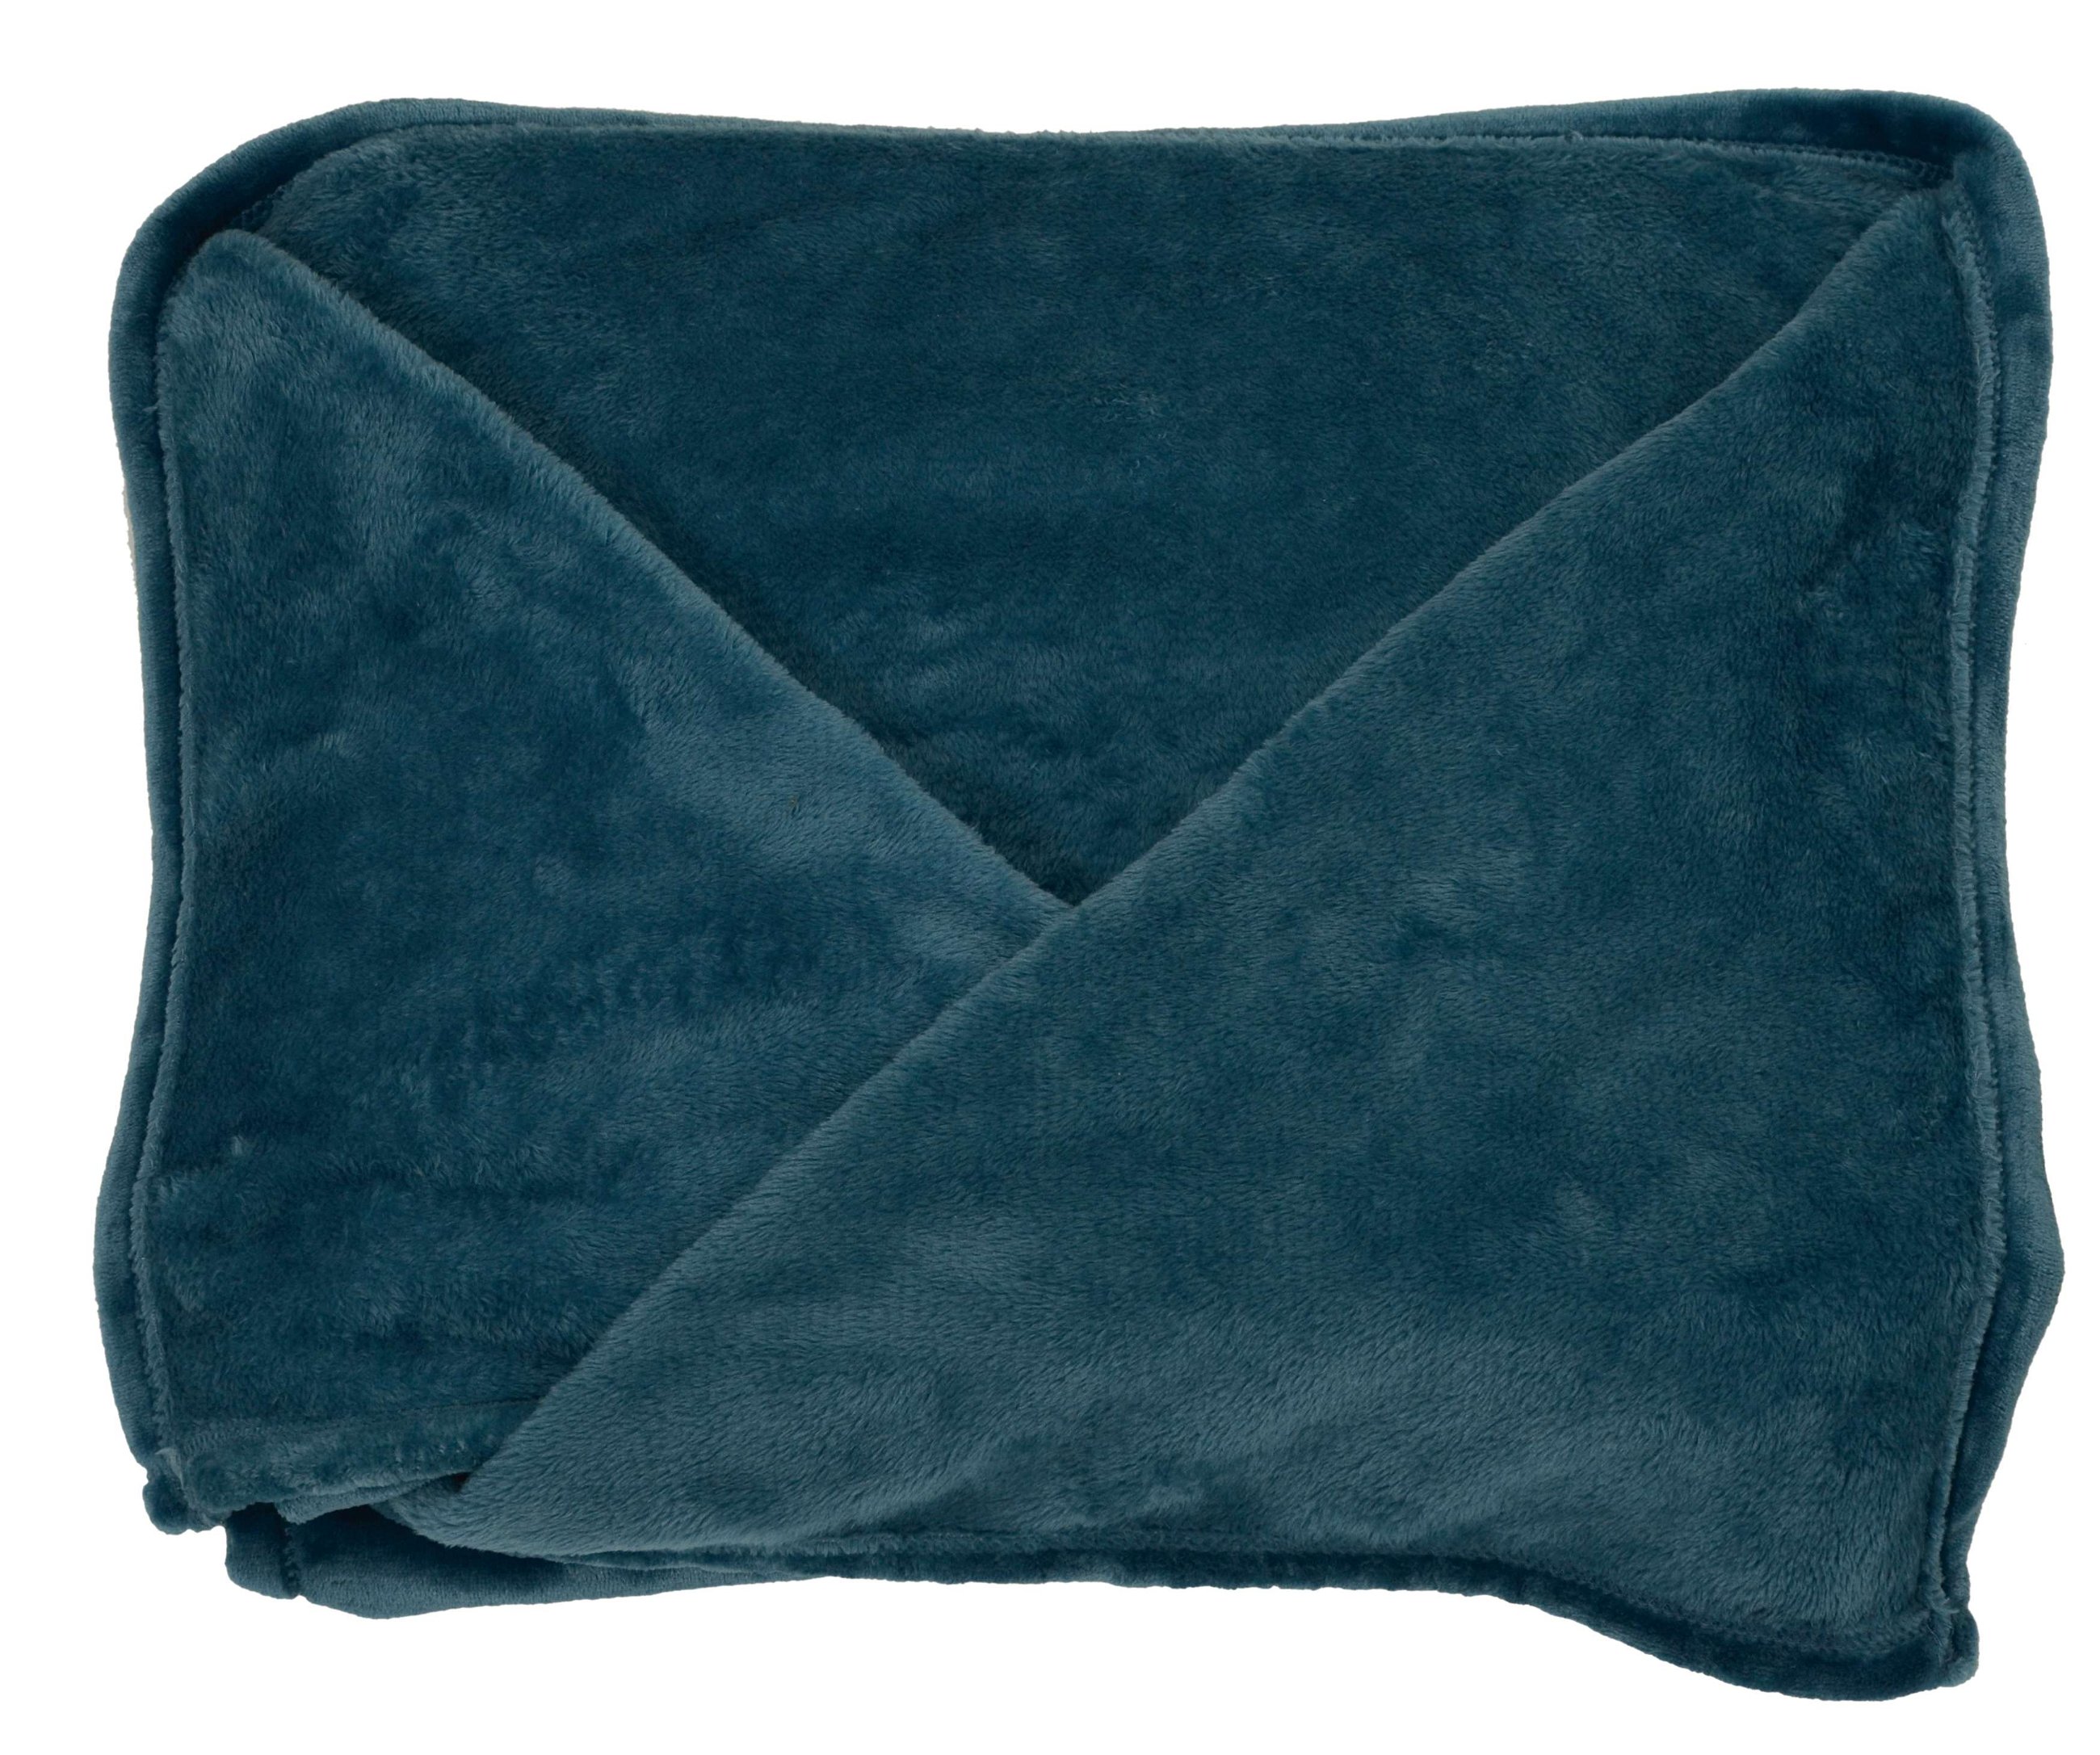 Snuggle fleece blanket with sleeves blue 150x180cm